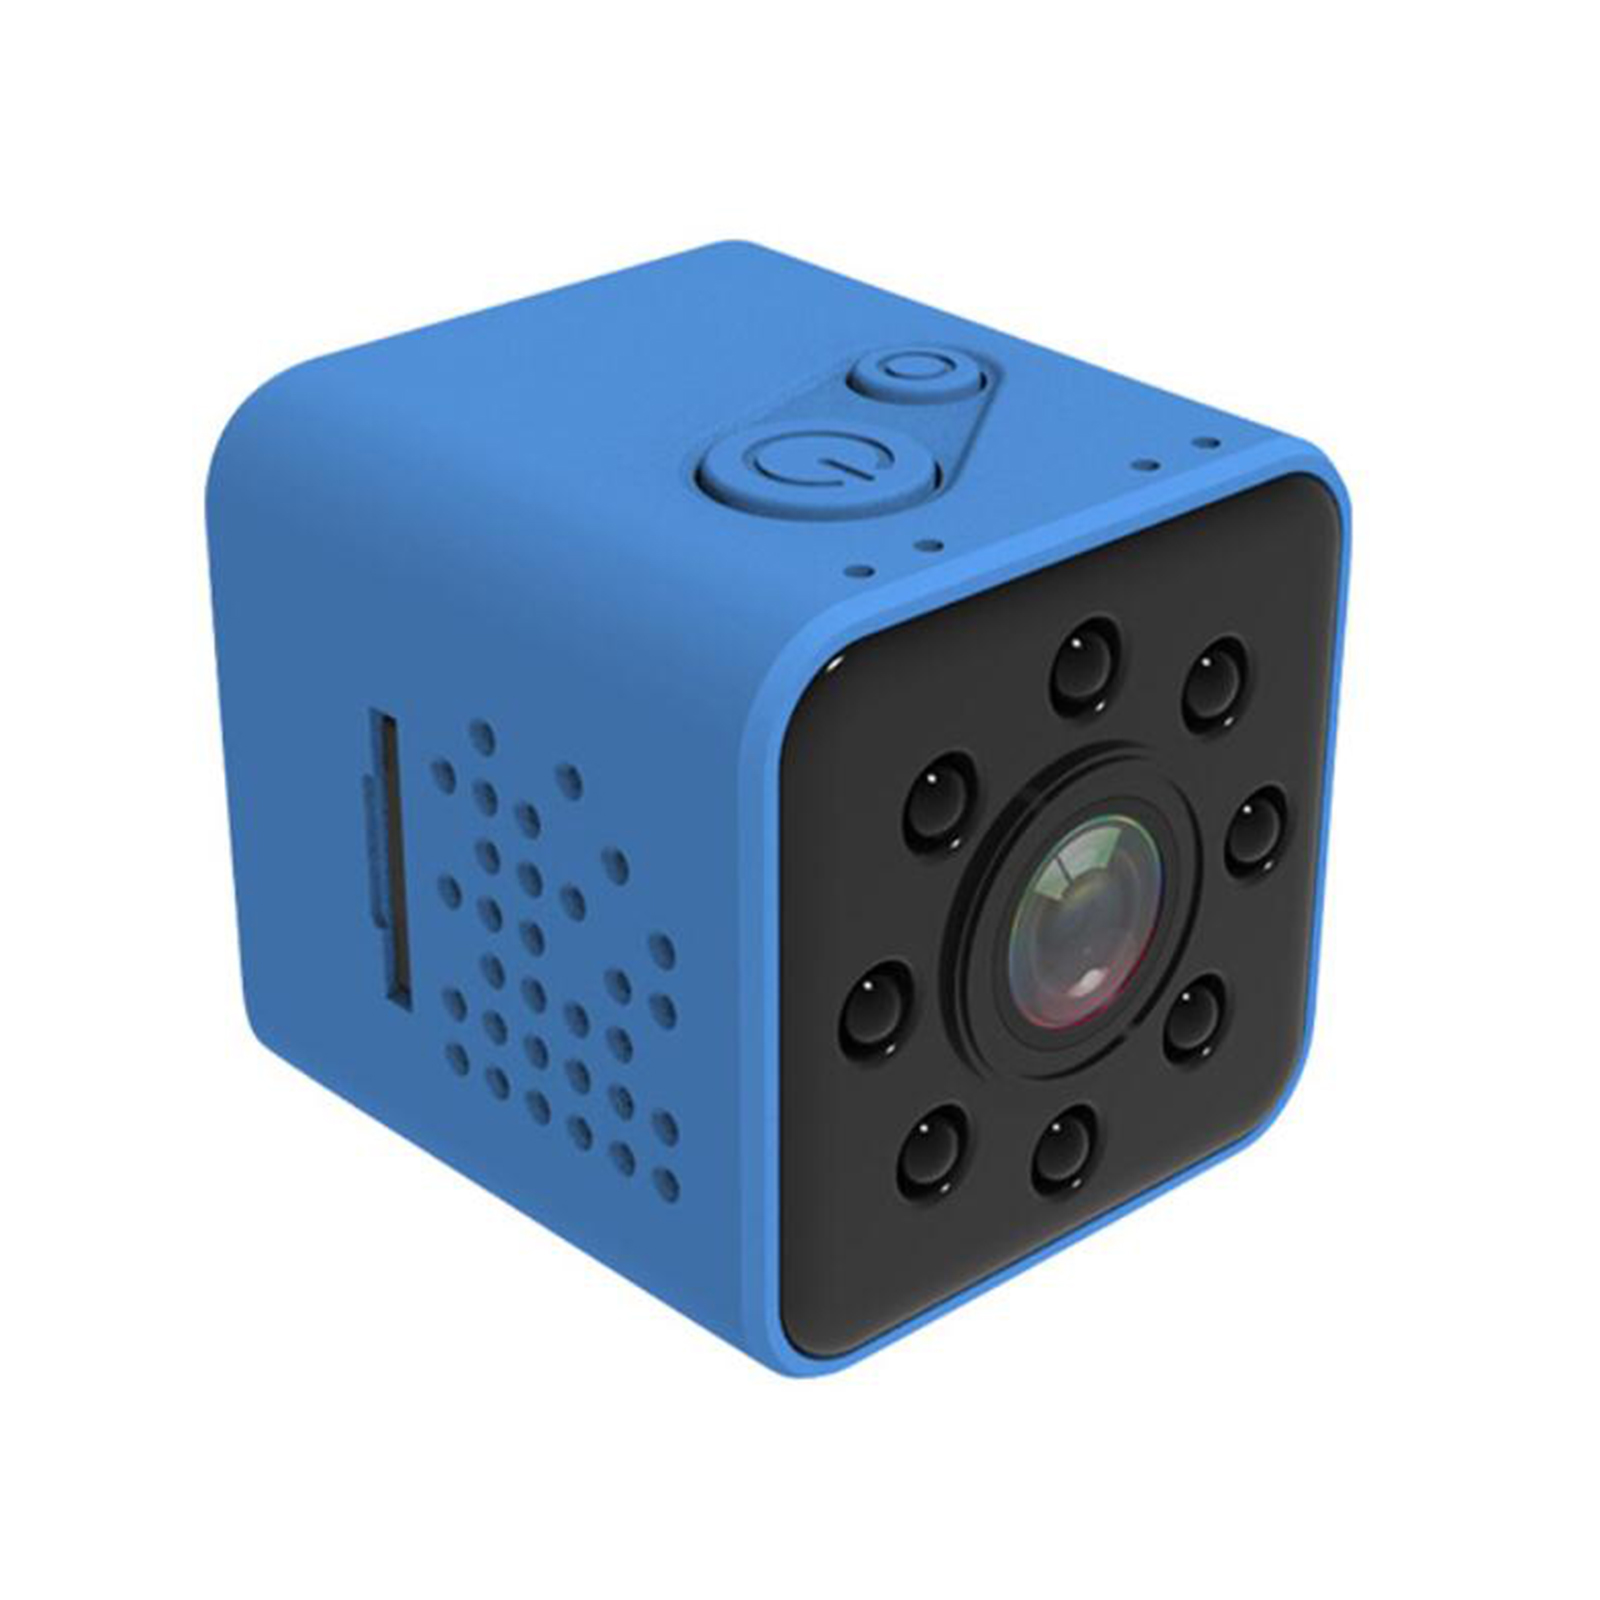 Sq23 Mini Camera 1080p Hd Wifi Action Camera Wide Angle Night Vision Waterproof Camcorder Video Micro Recorder blue